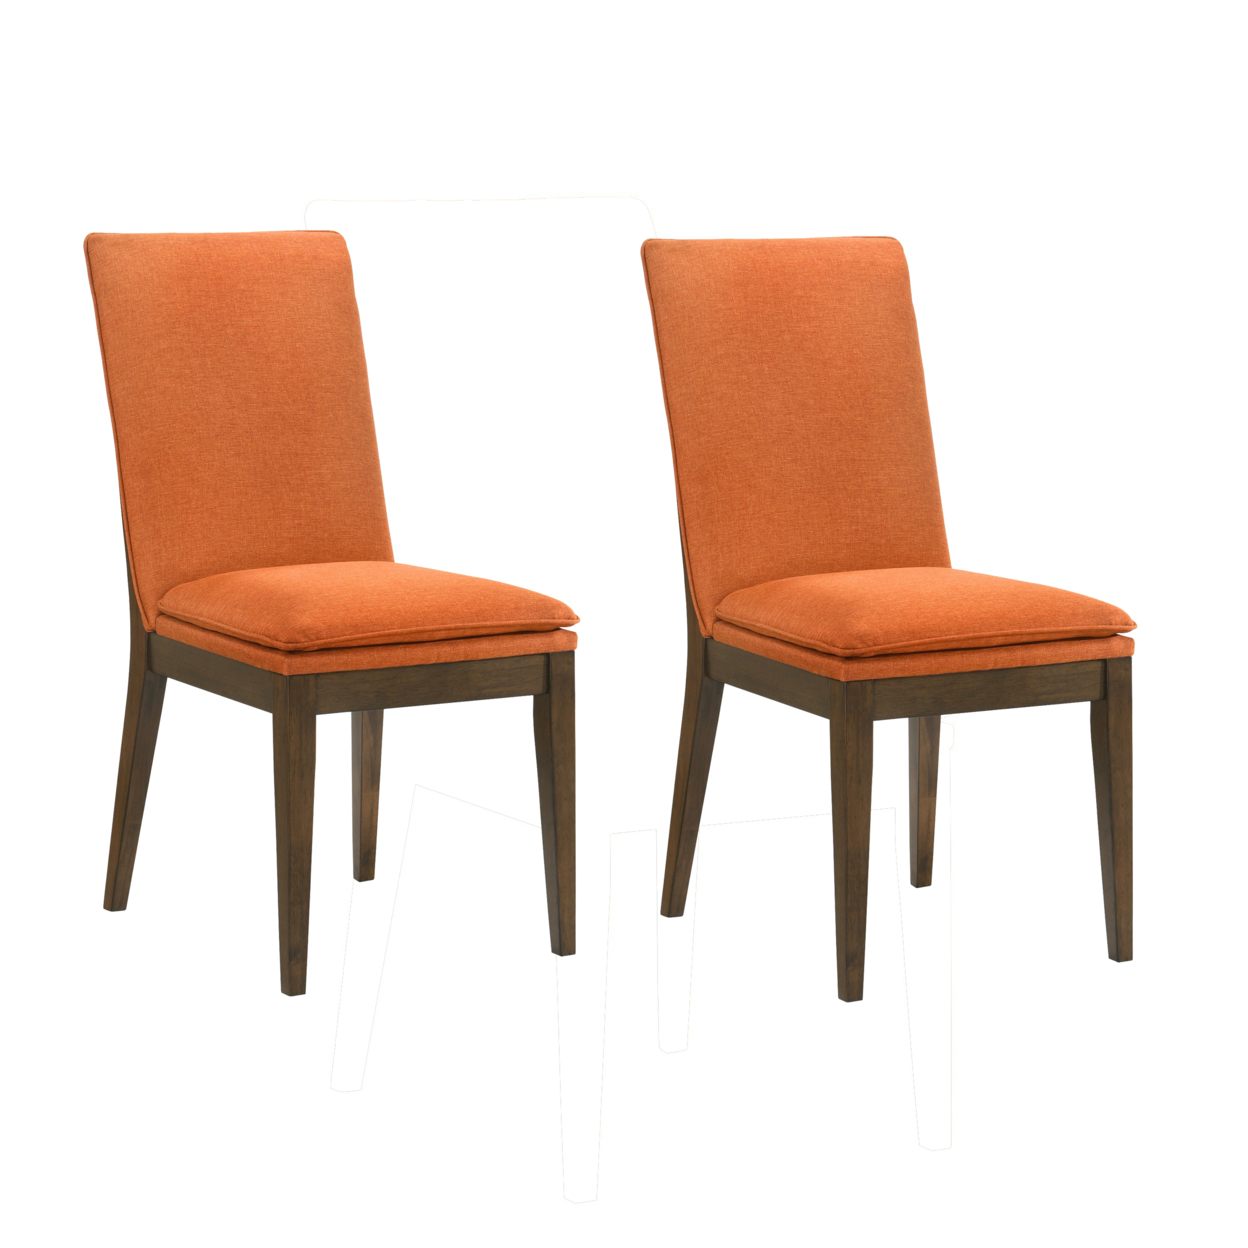 Nick 26 Inch Set Of 2 Dining Chairs, Walnut Brown Rubberwood Frame, Orange- Saltoro Sherpi